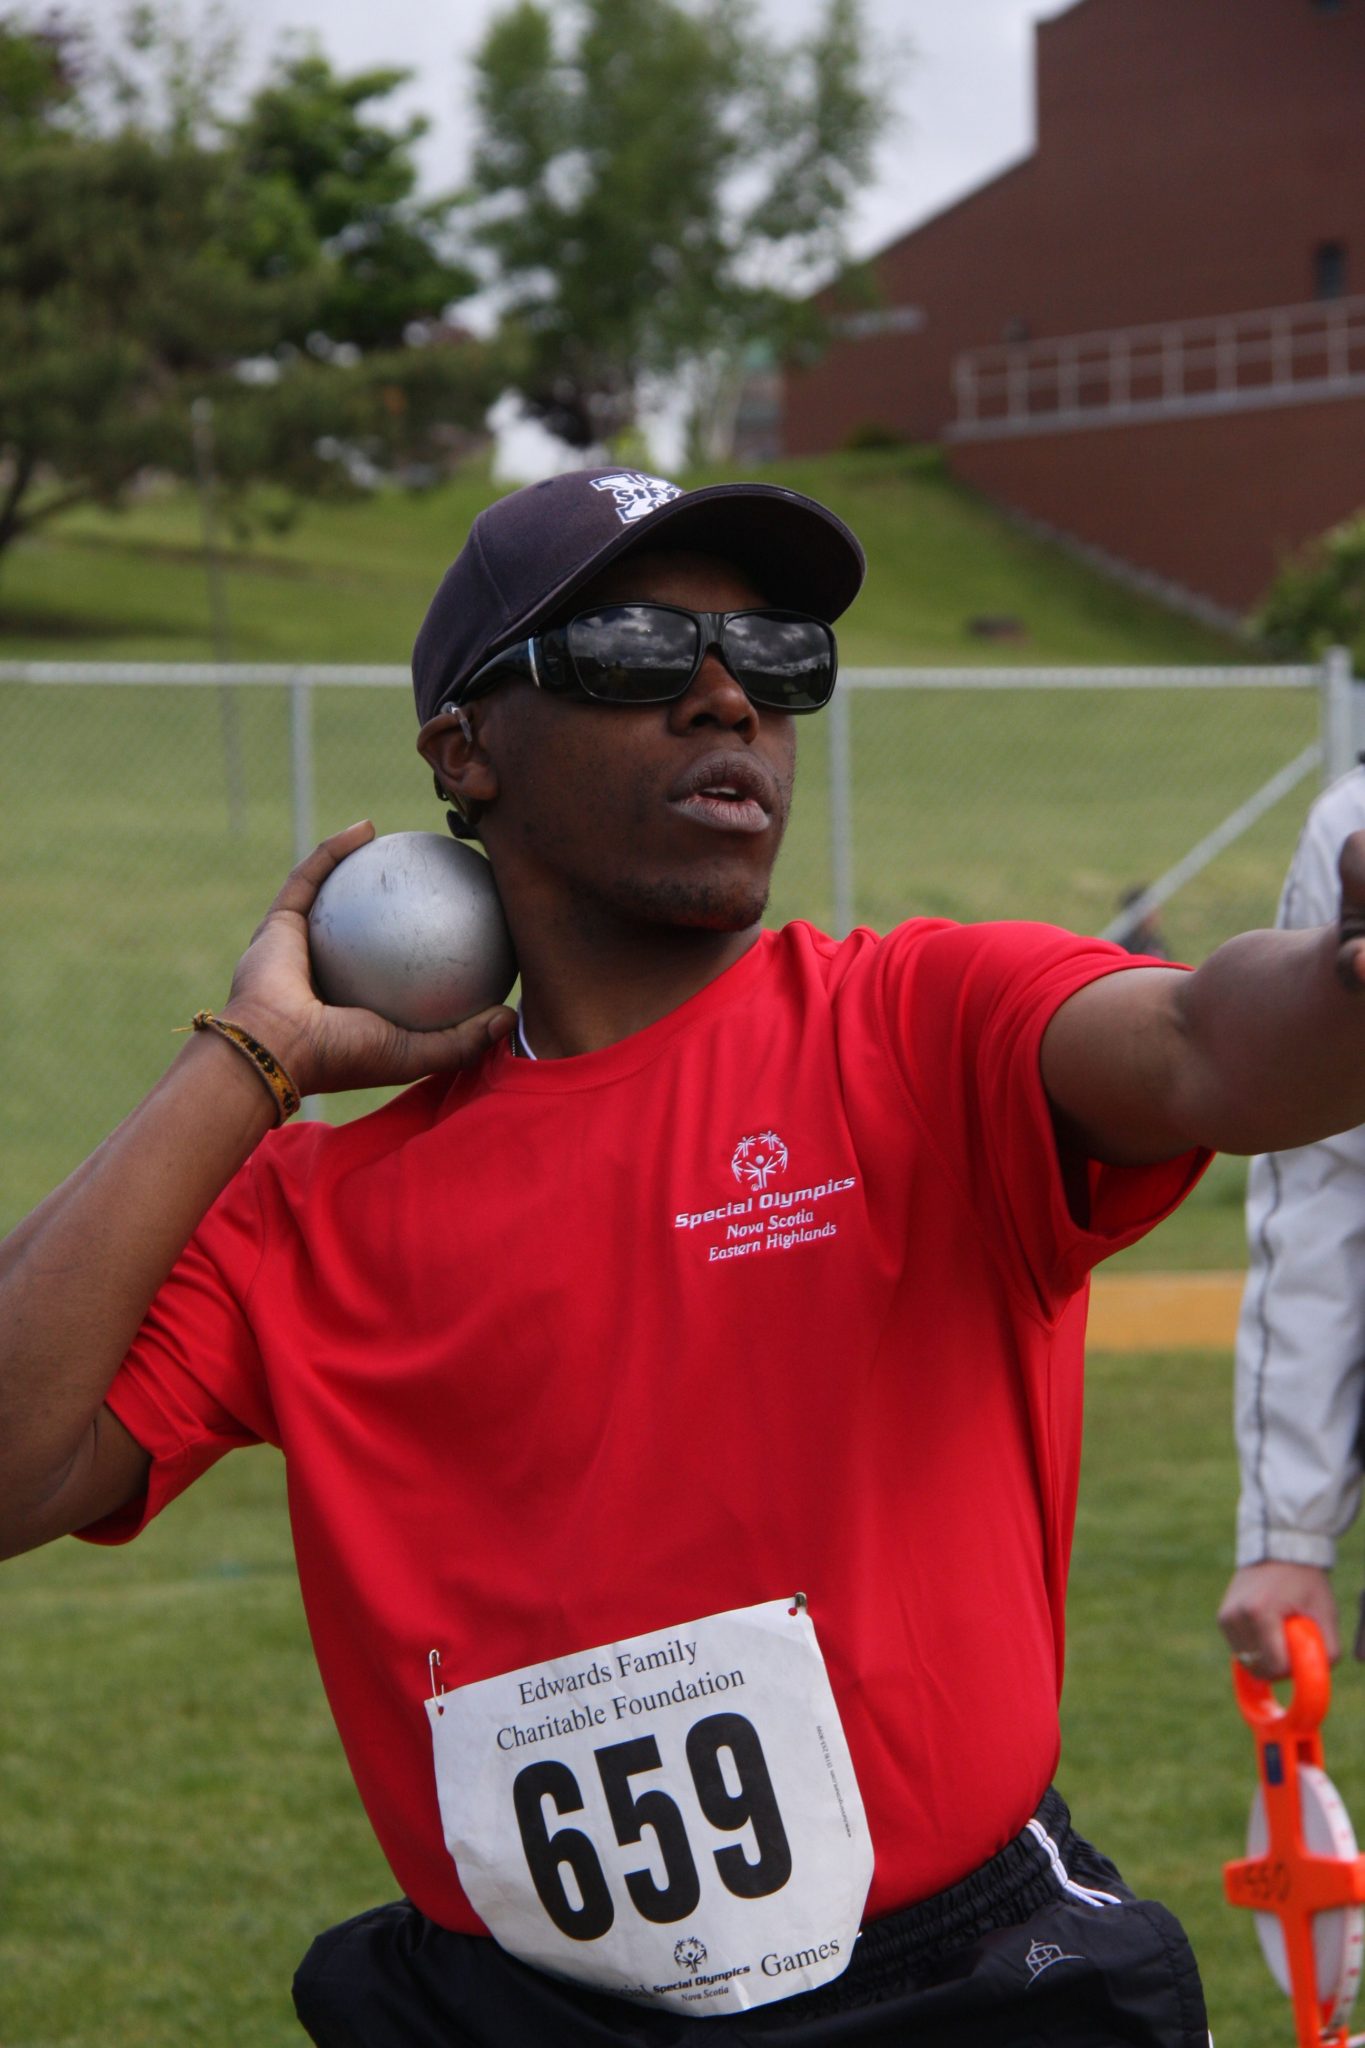 Special Olympics Regional Games Underway in Antigonish